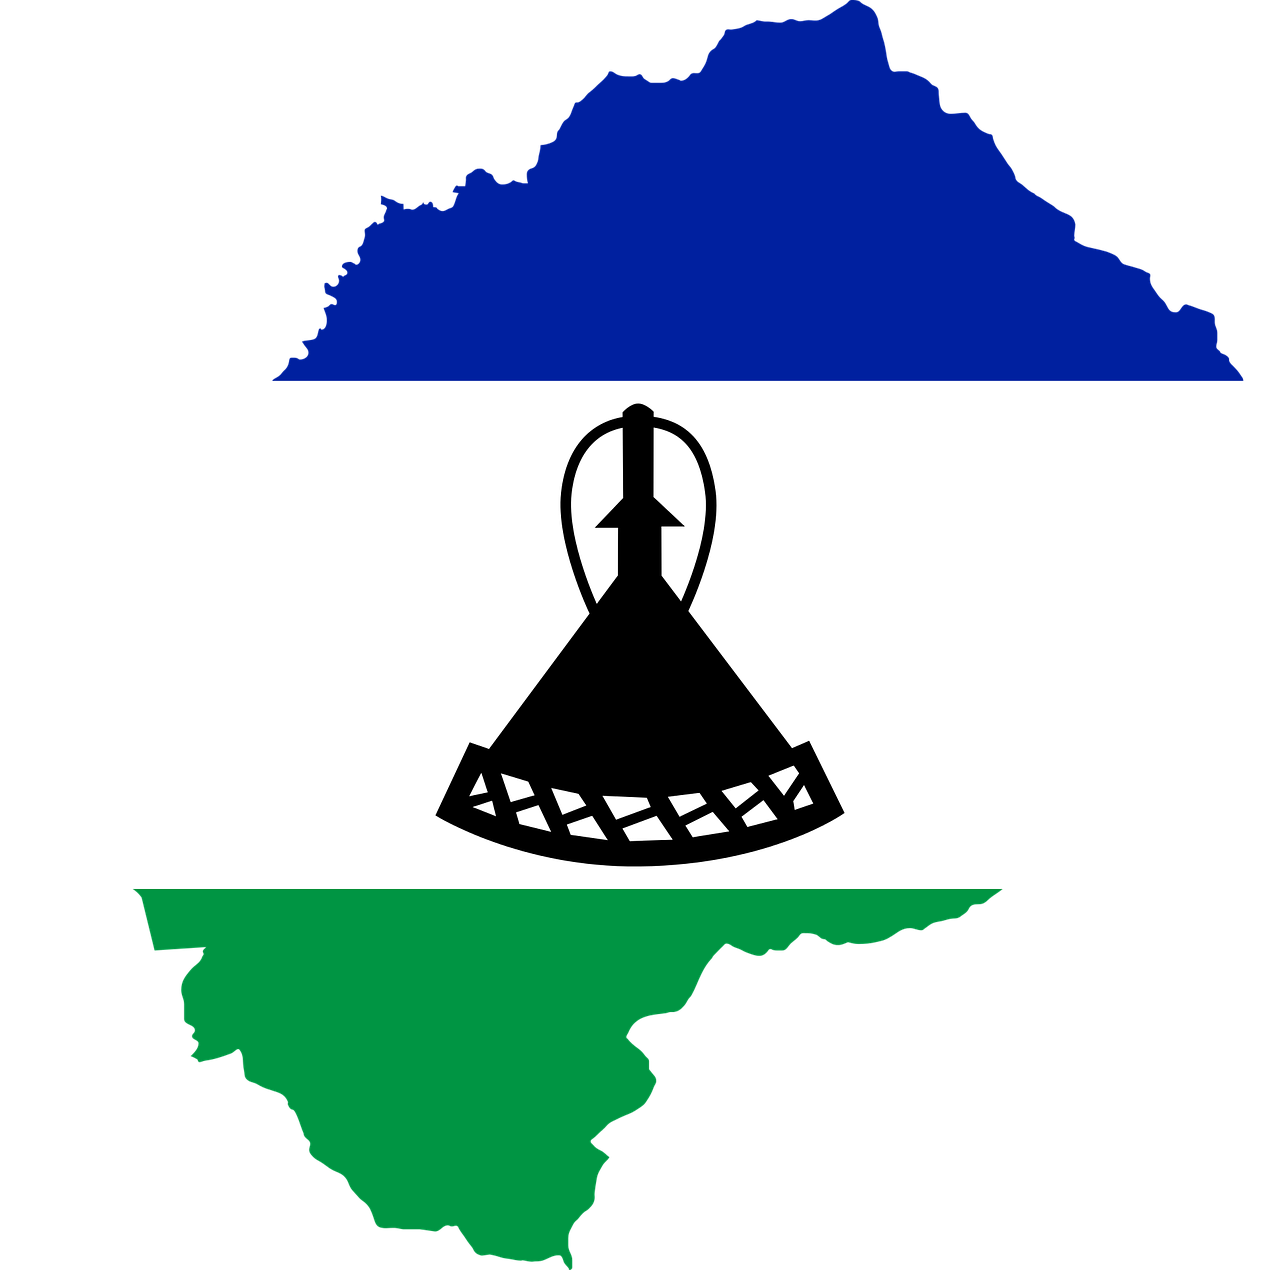 Lesotho, Vėliava, Žemėlapis, Geografija, Kontūrai, Afrika, Šalis, Tauta, Sienos, Svg